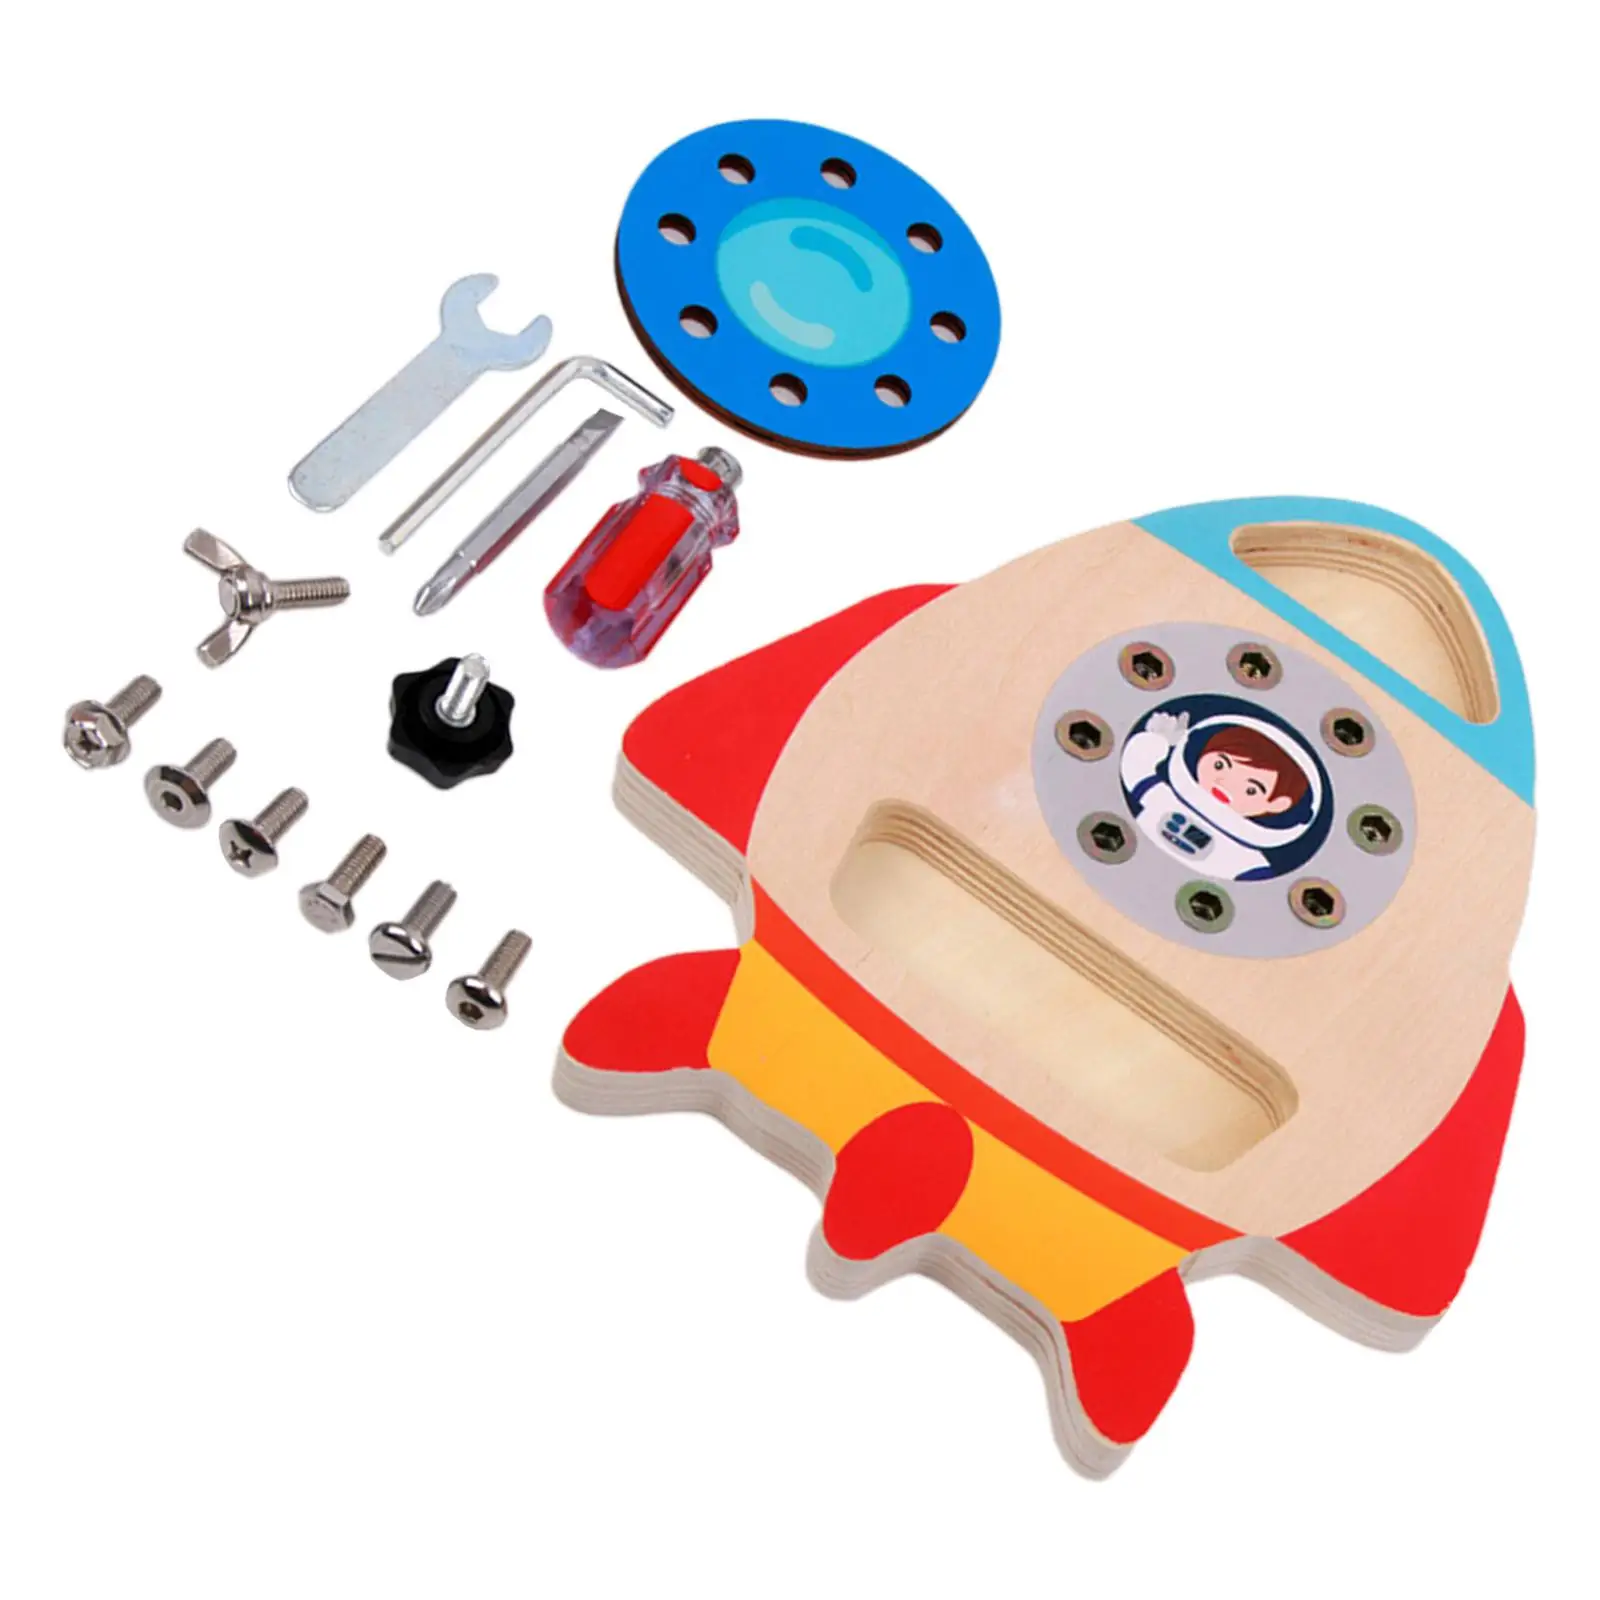 Montessori Rocket Shaped Screwdriver Board Set Educational Sensory Learning Toy Screw Building Construction Set for Children Boy